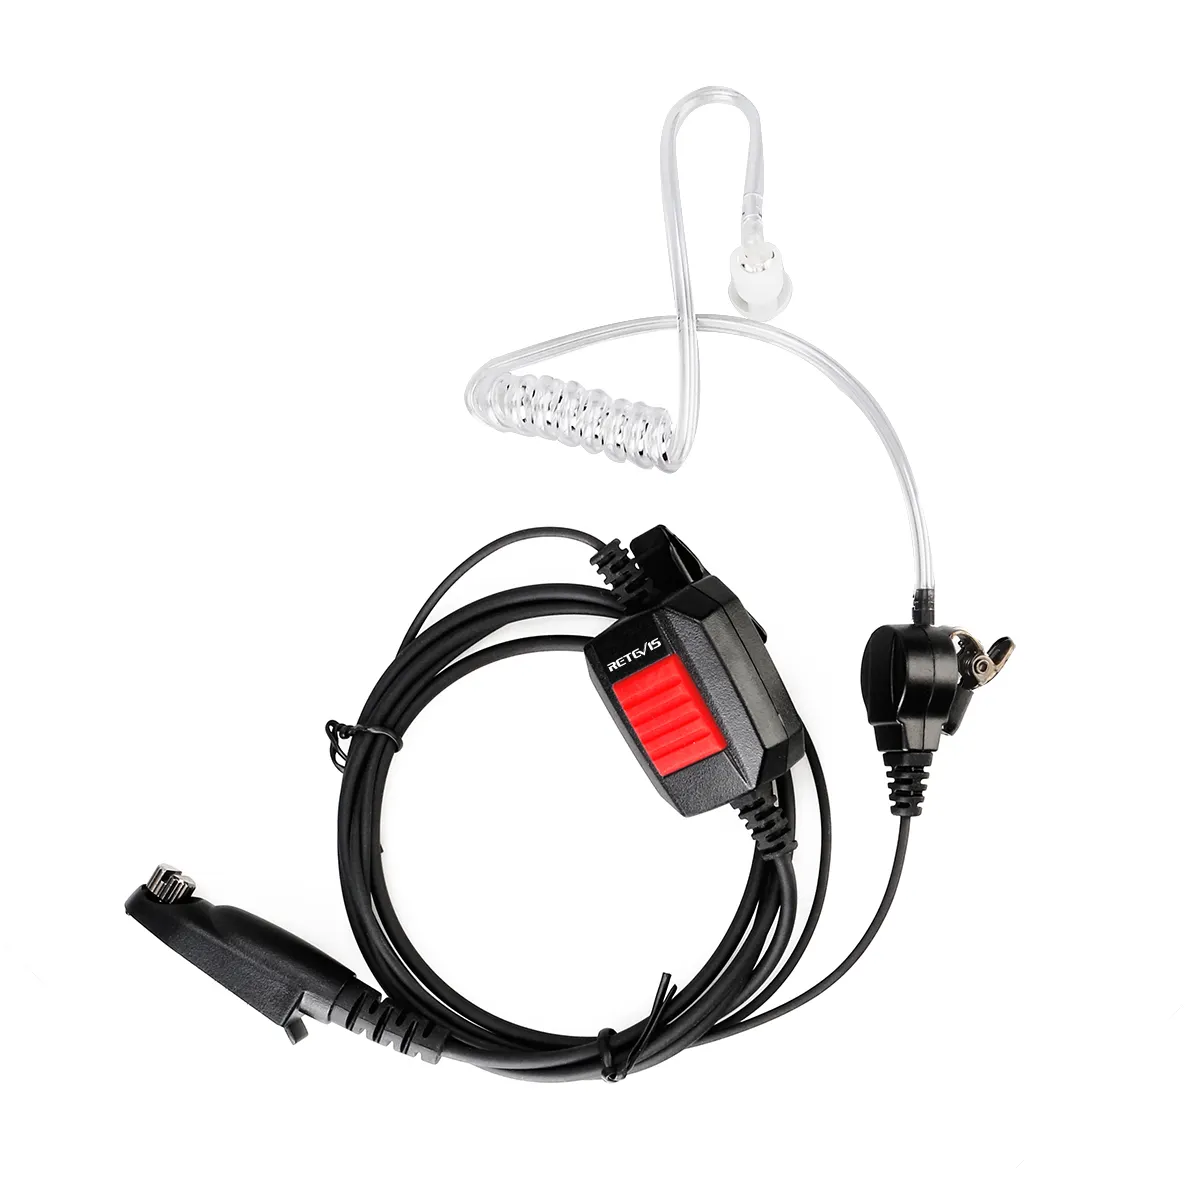 Retevis ea110m 6pin stylus ptt, fone de ouvido com tubo de ar escondido, conector gp328plus, à prova d' água ip66